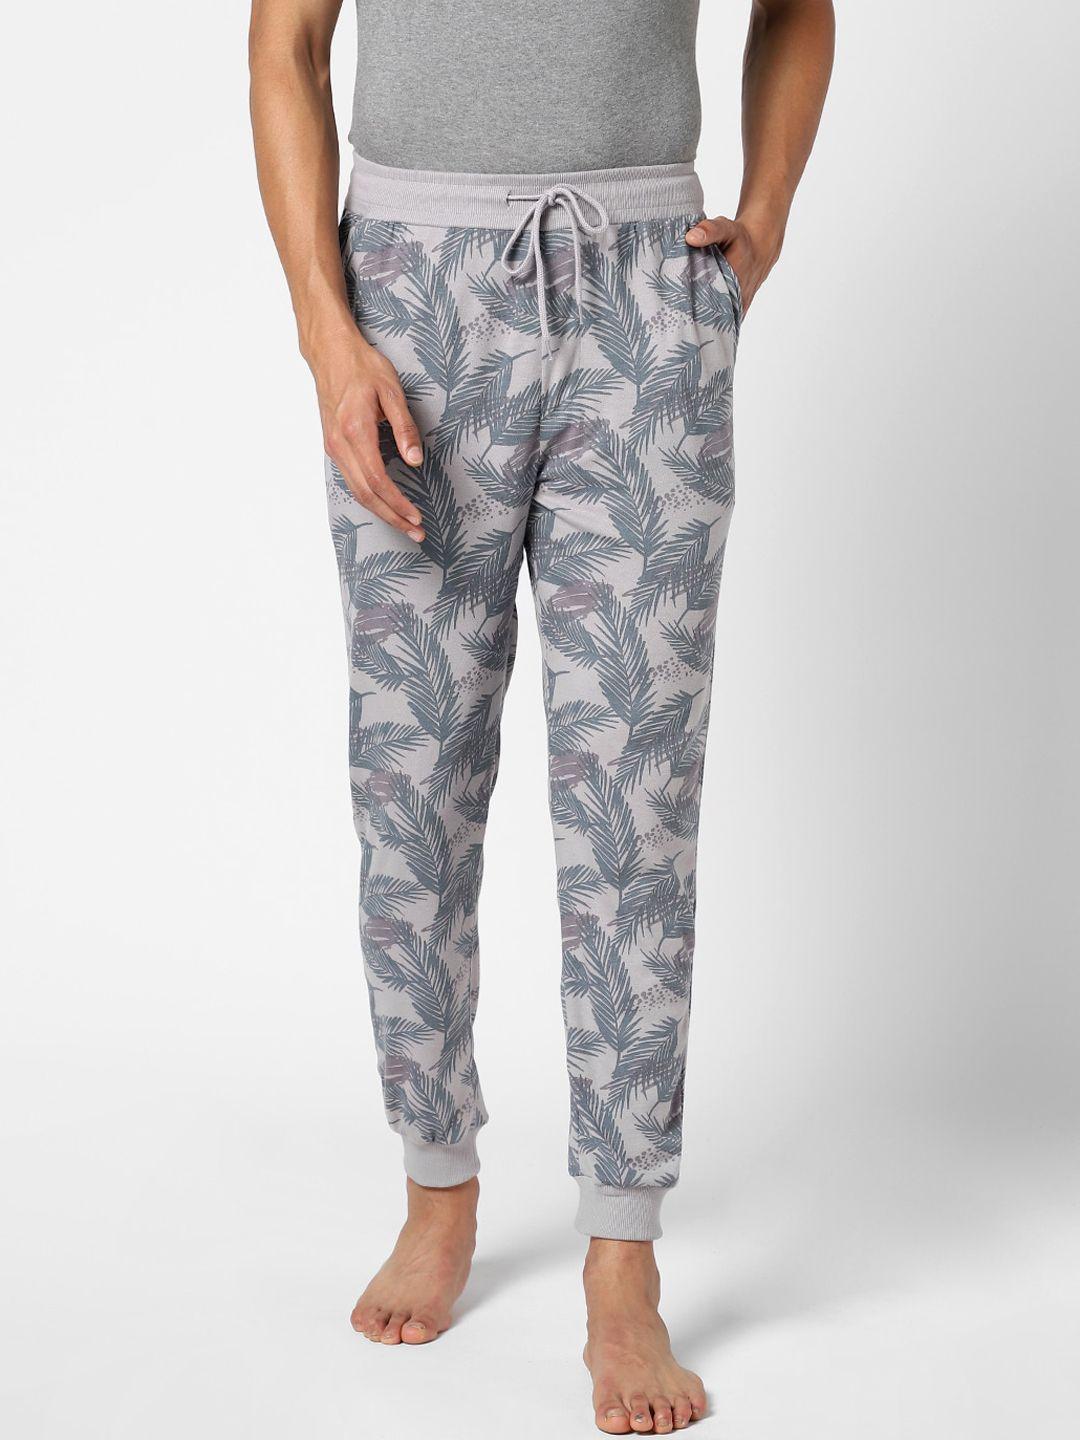 ajile by pantaloons men grey floral slim fit cotton lounge pants